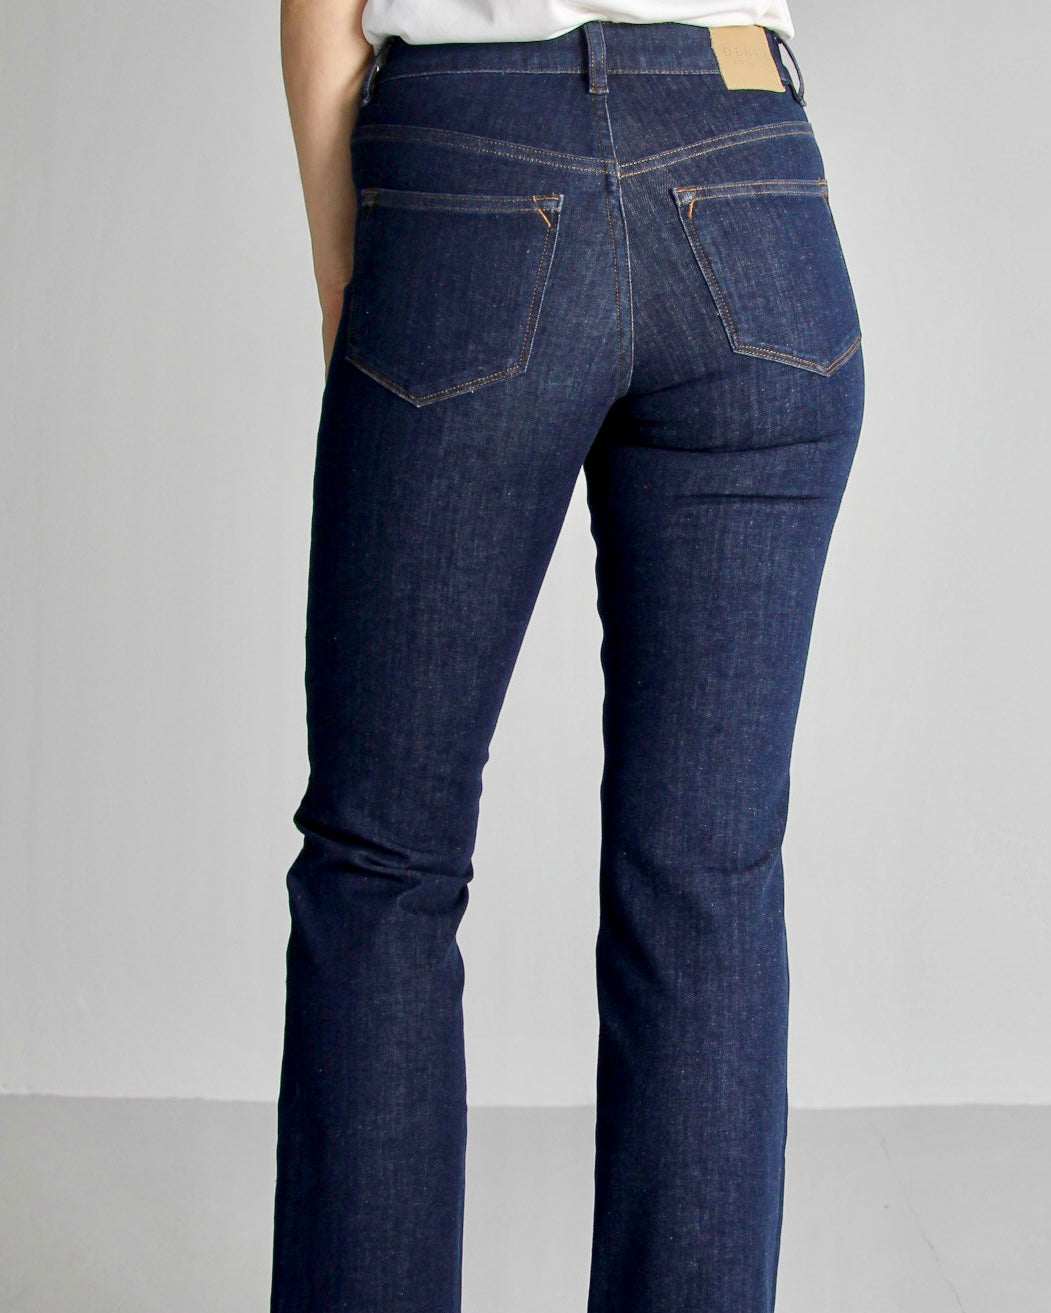 Påfyll på lager - Violet Evening blue Jeans - Dame - Straight leg - High waist - Stretchy